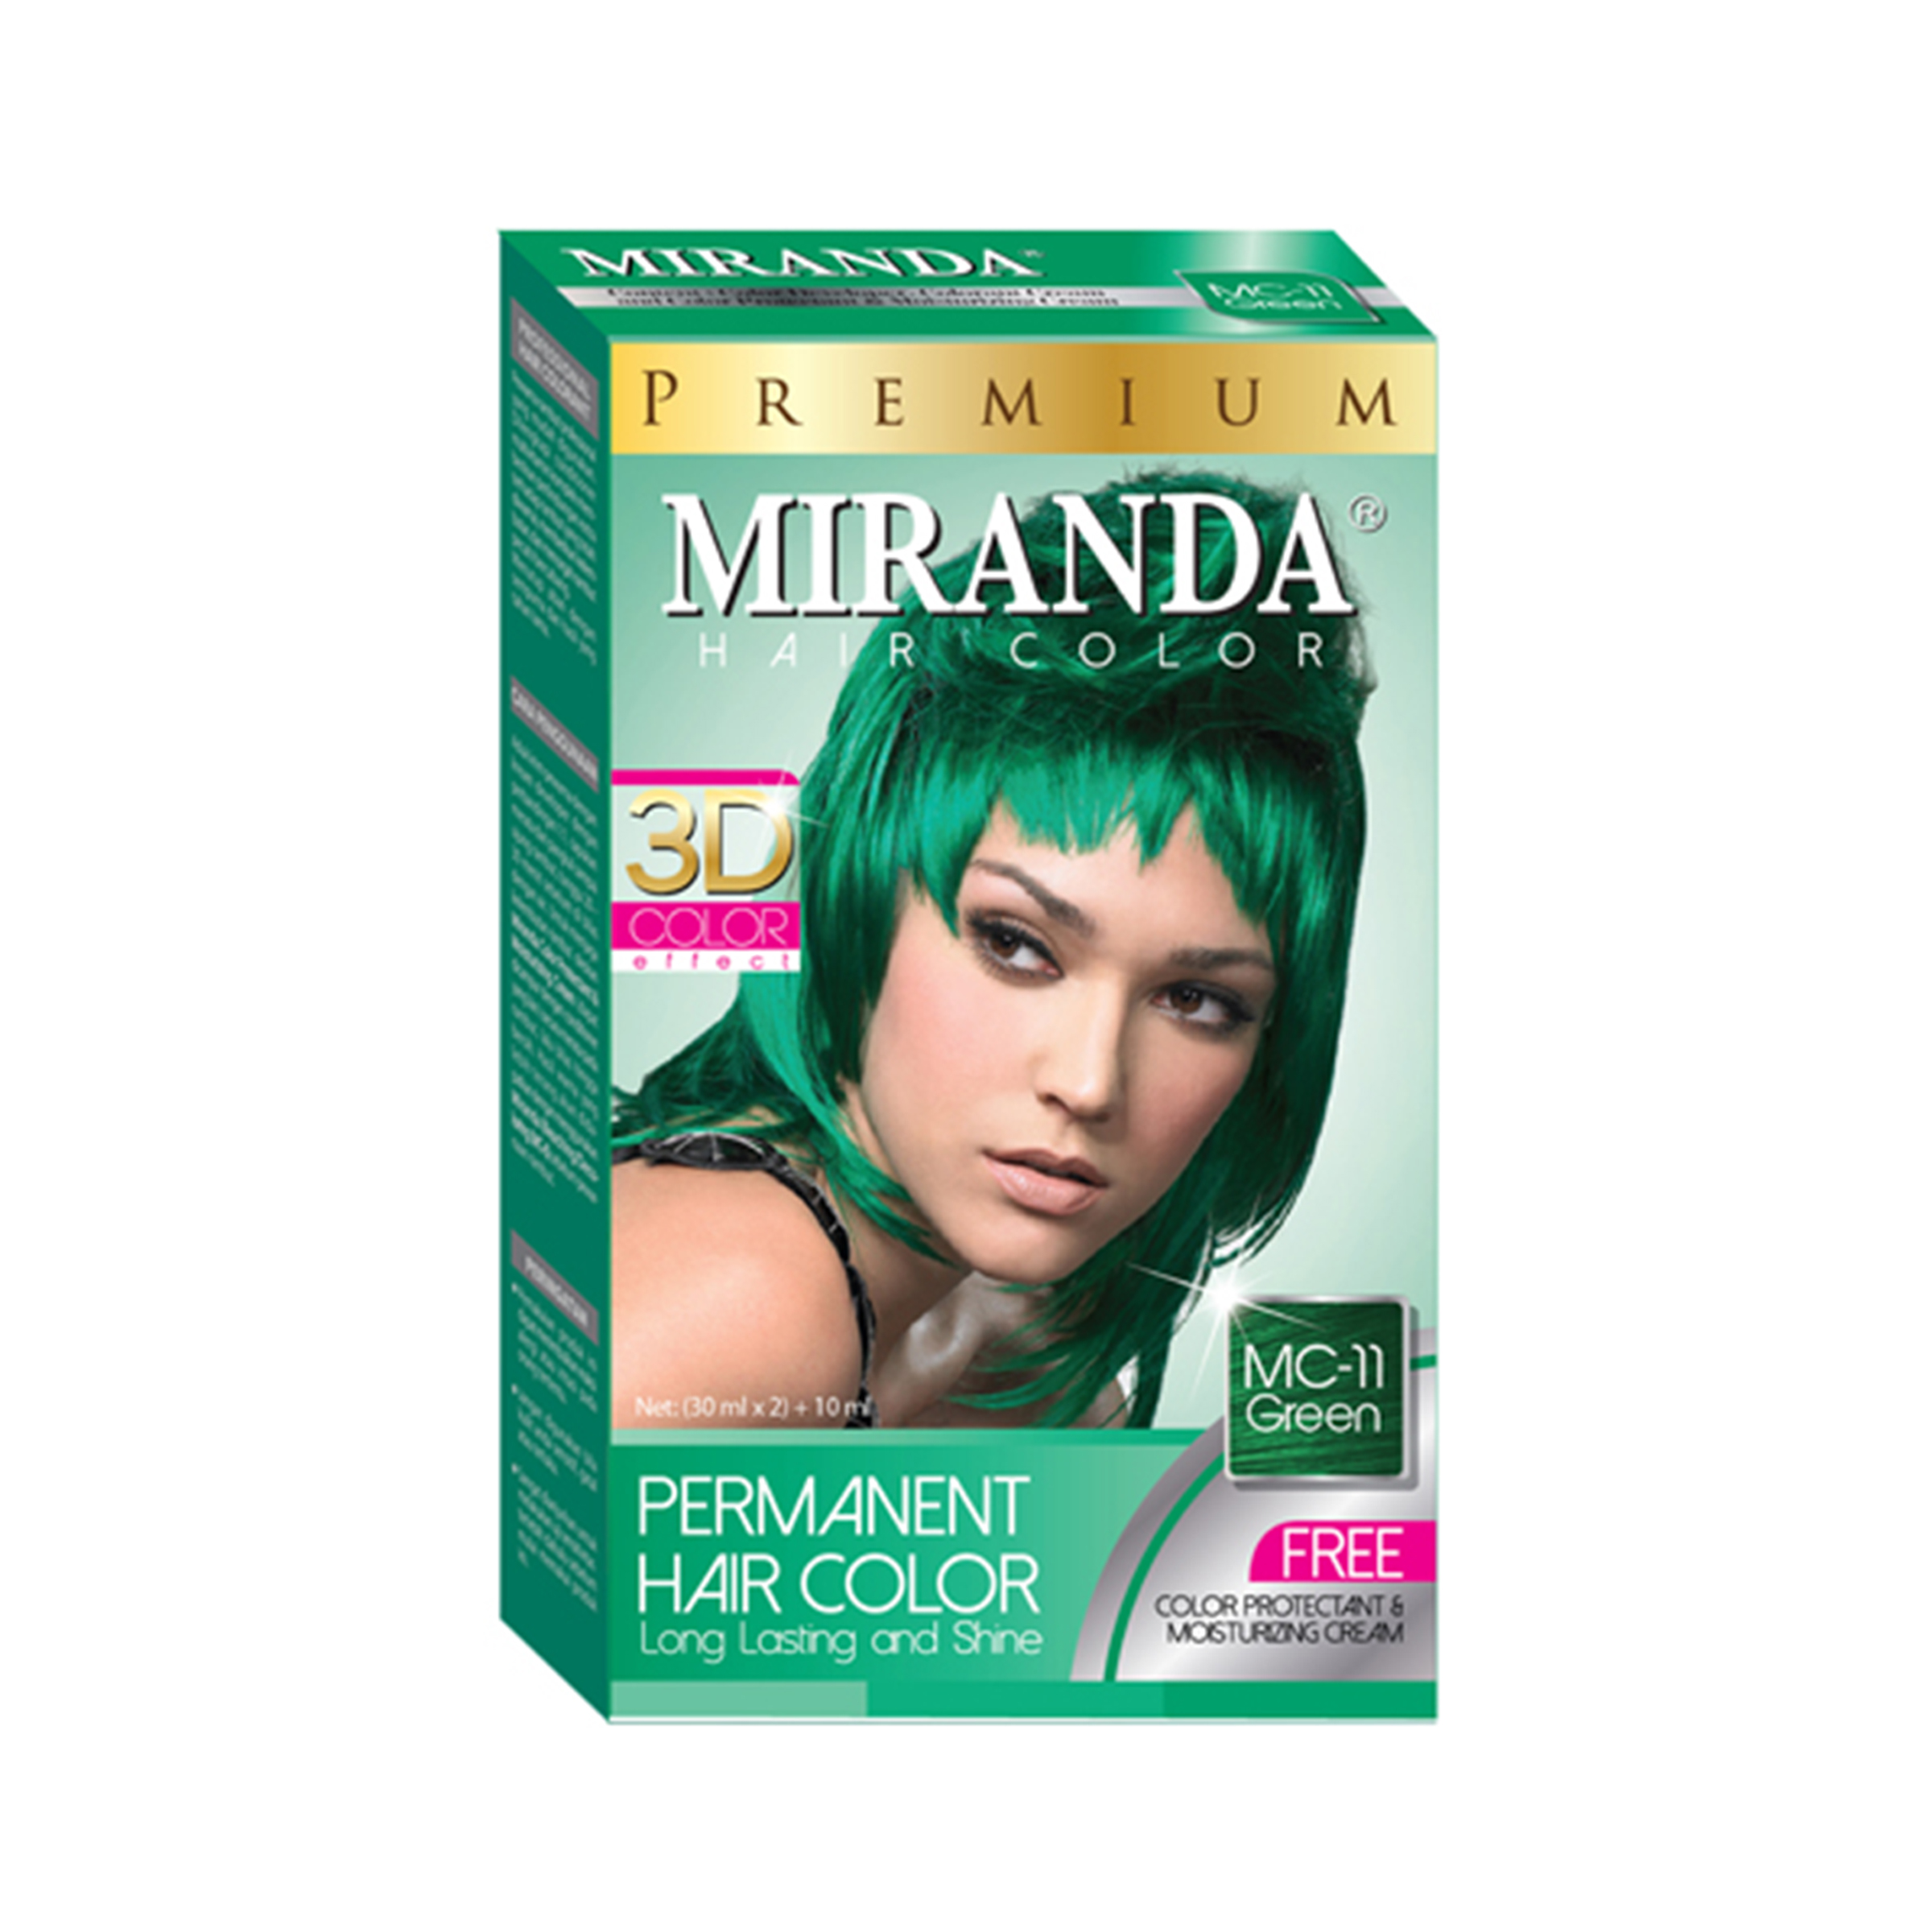 Miranda Premium Hair Color MC-11 Green 30 ml / Cat Rambut Warna Hijau